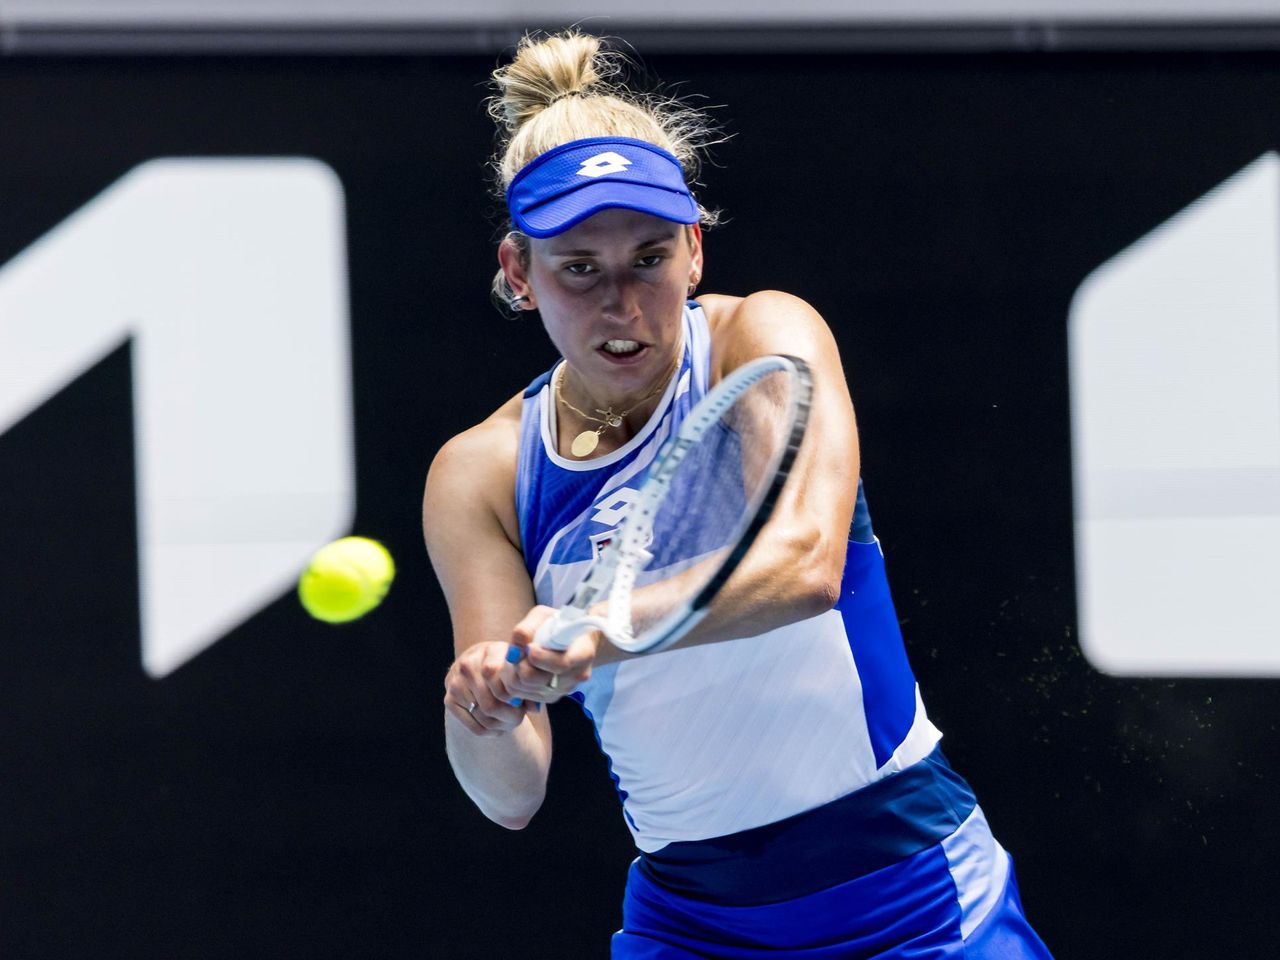 Australian Open 2023 Furios verteidigt, gefühlvoll abgeschlossen - brillanter Punkt für Elise Mertens - Tennis Video